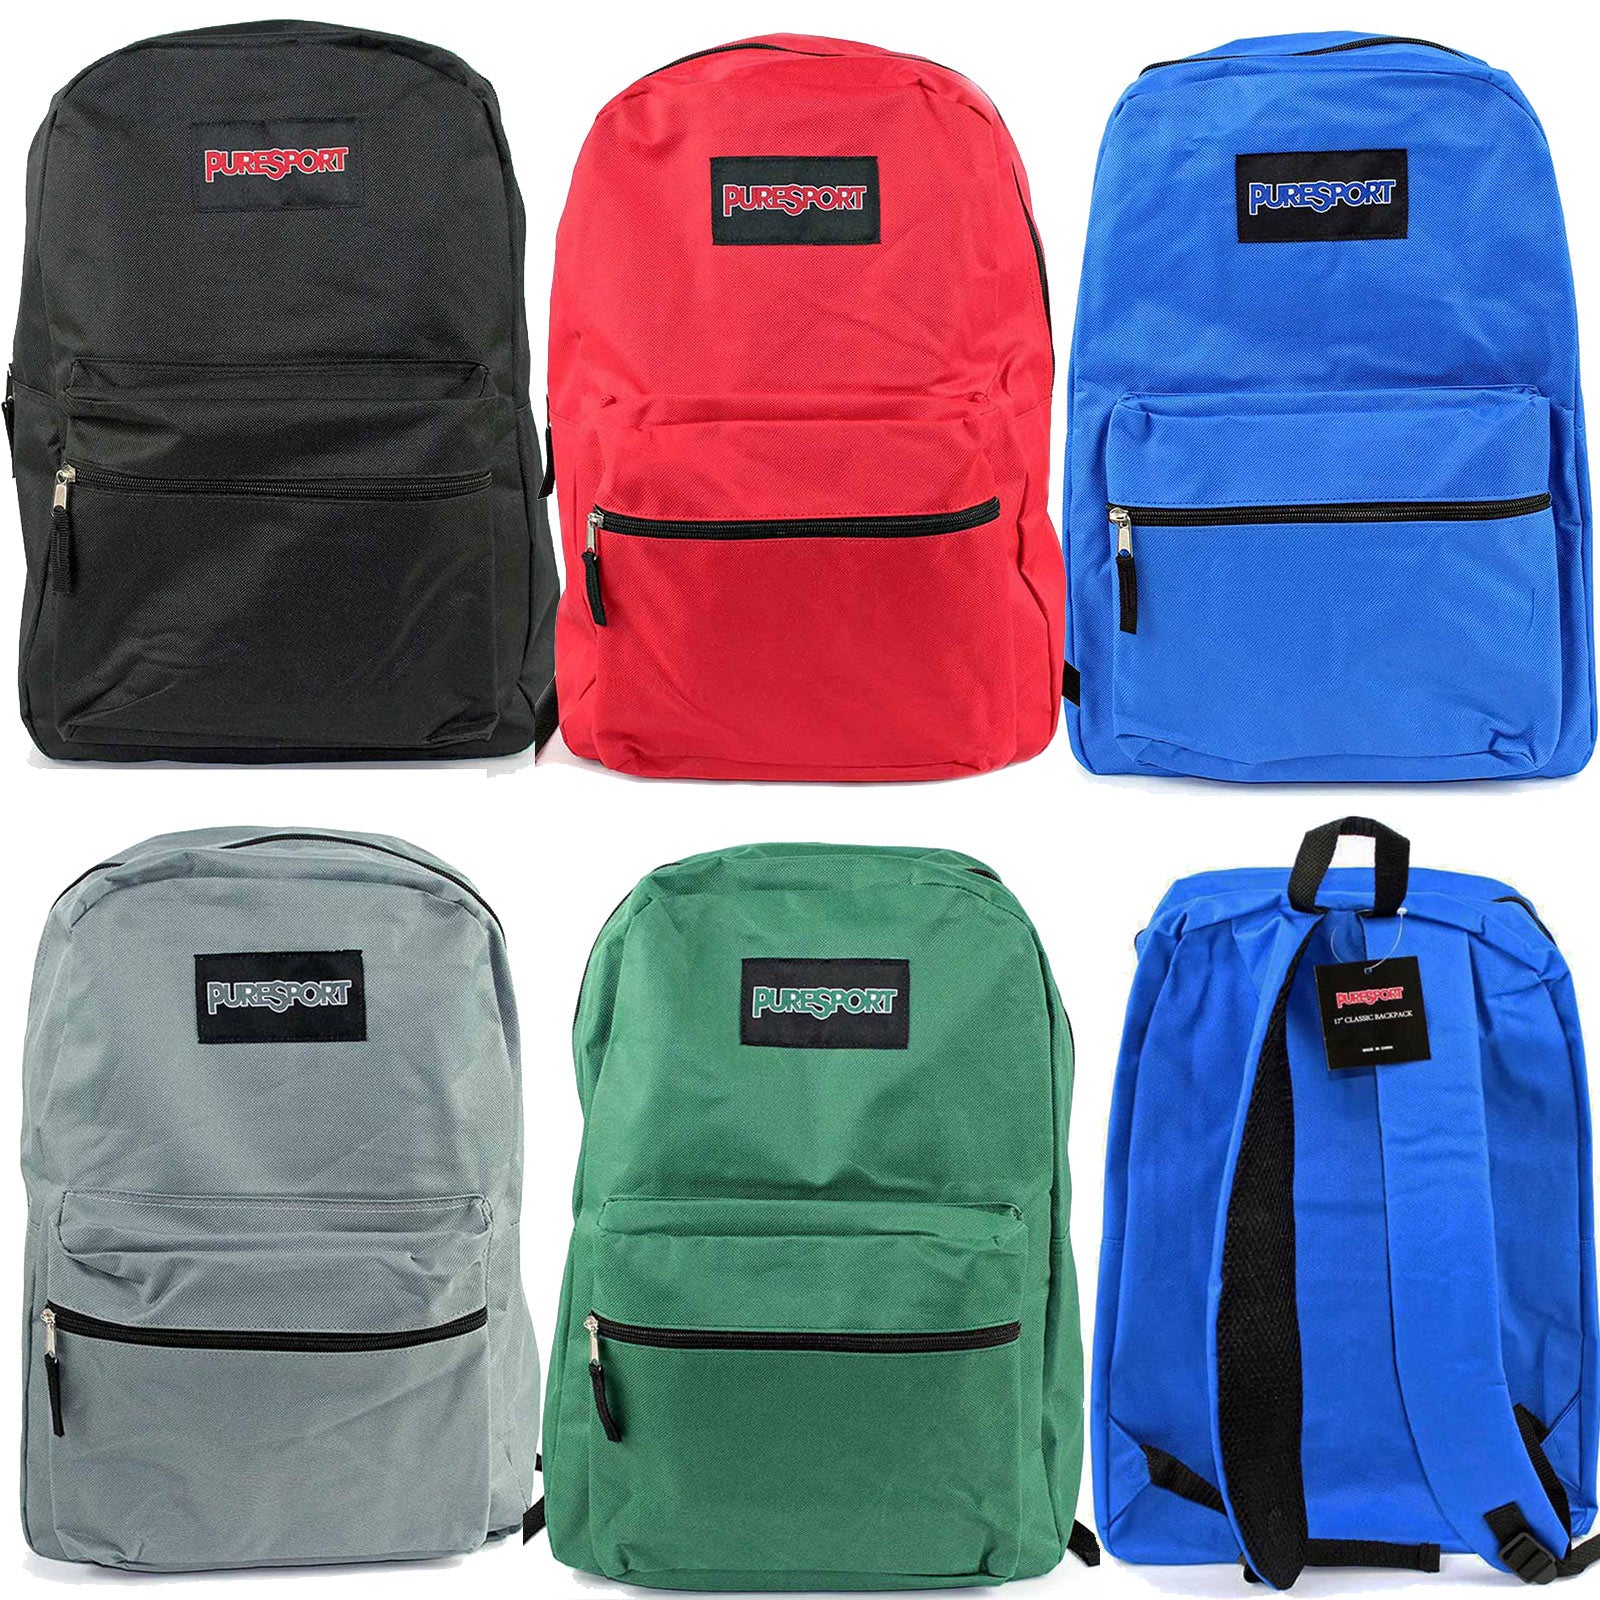 boys wholesale backpacks in bulk for back to school 17 inch